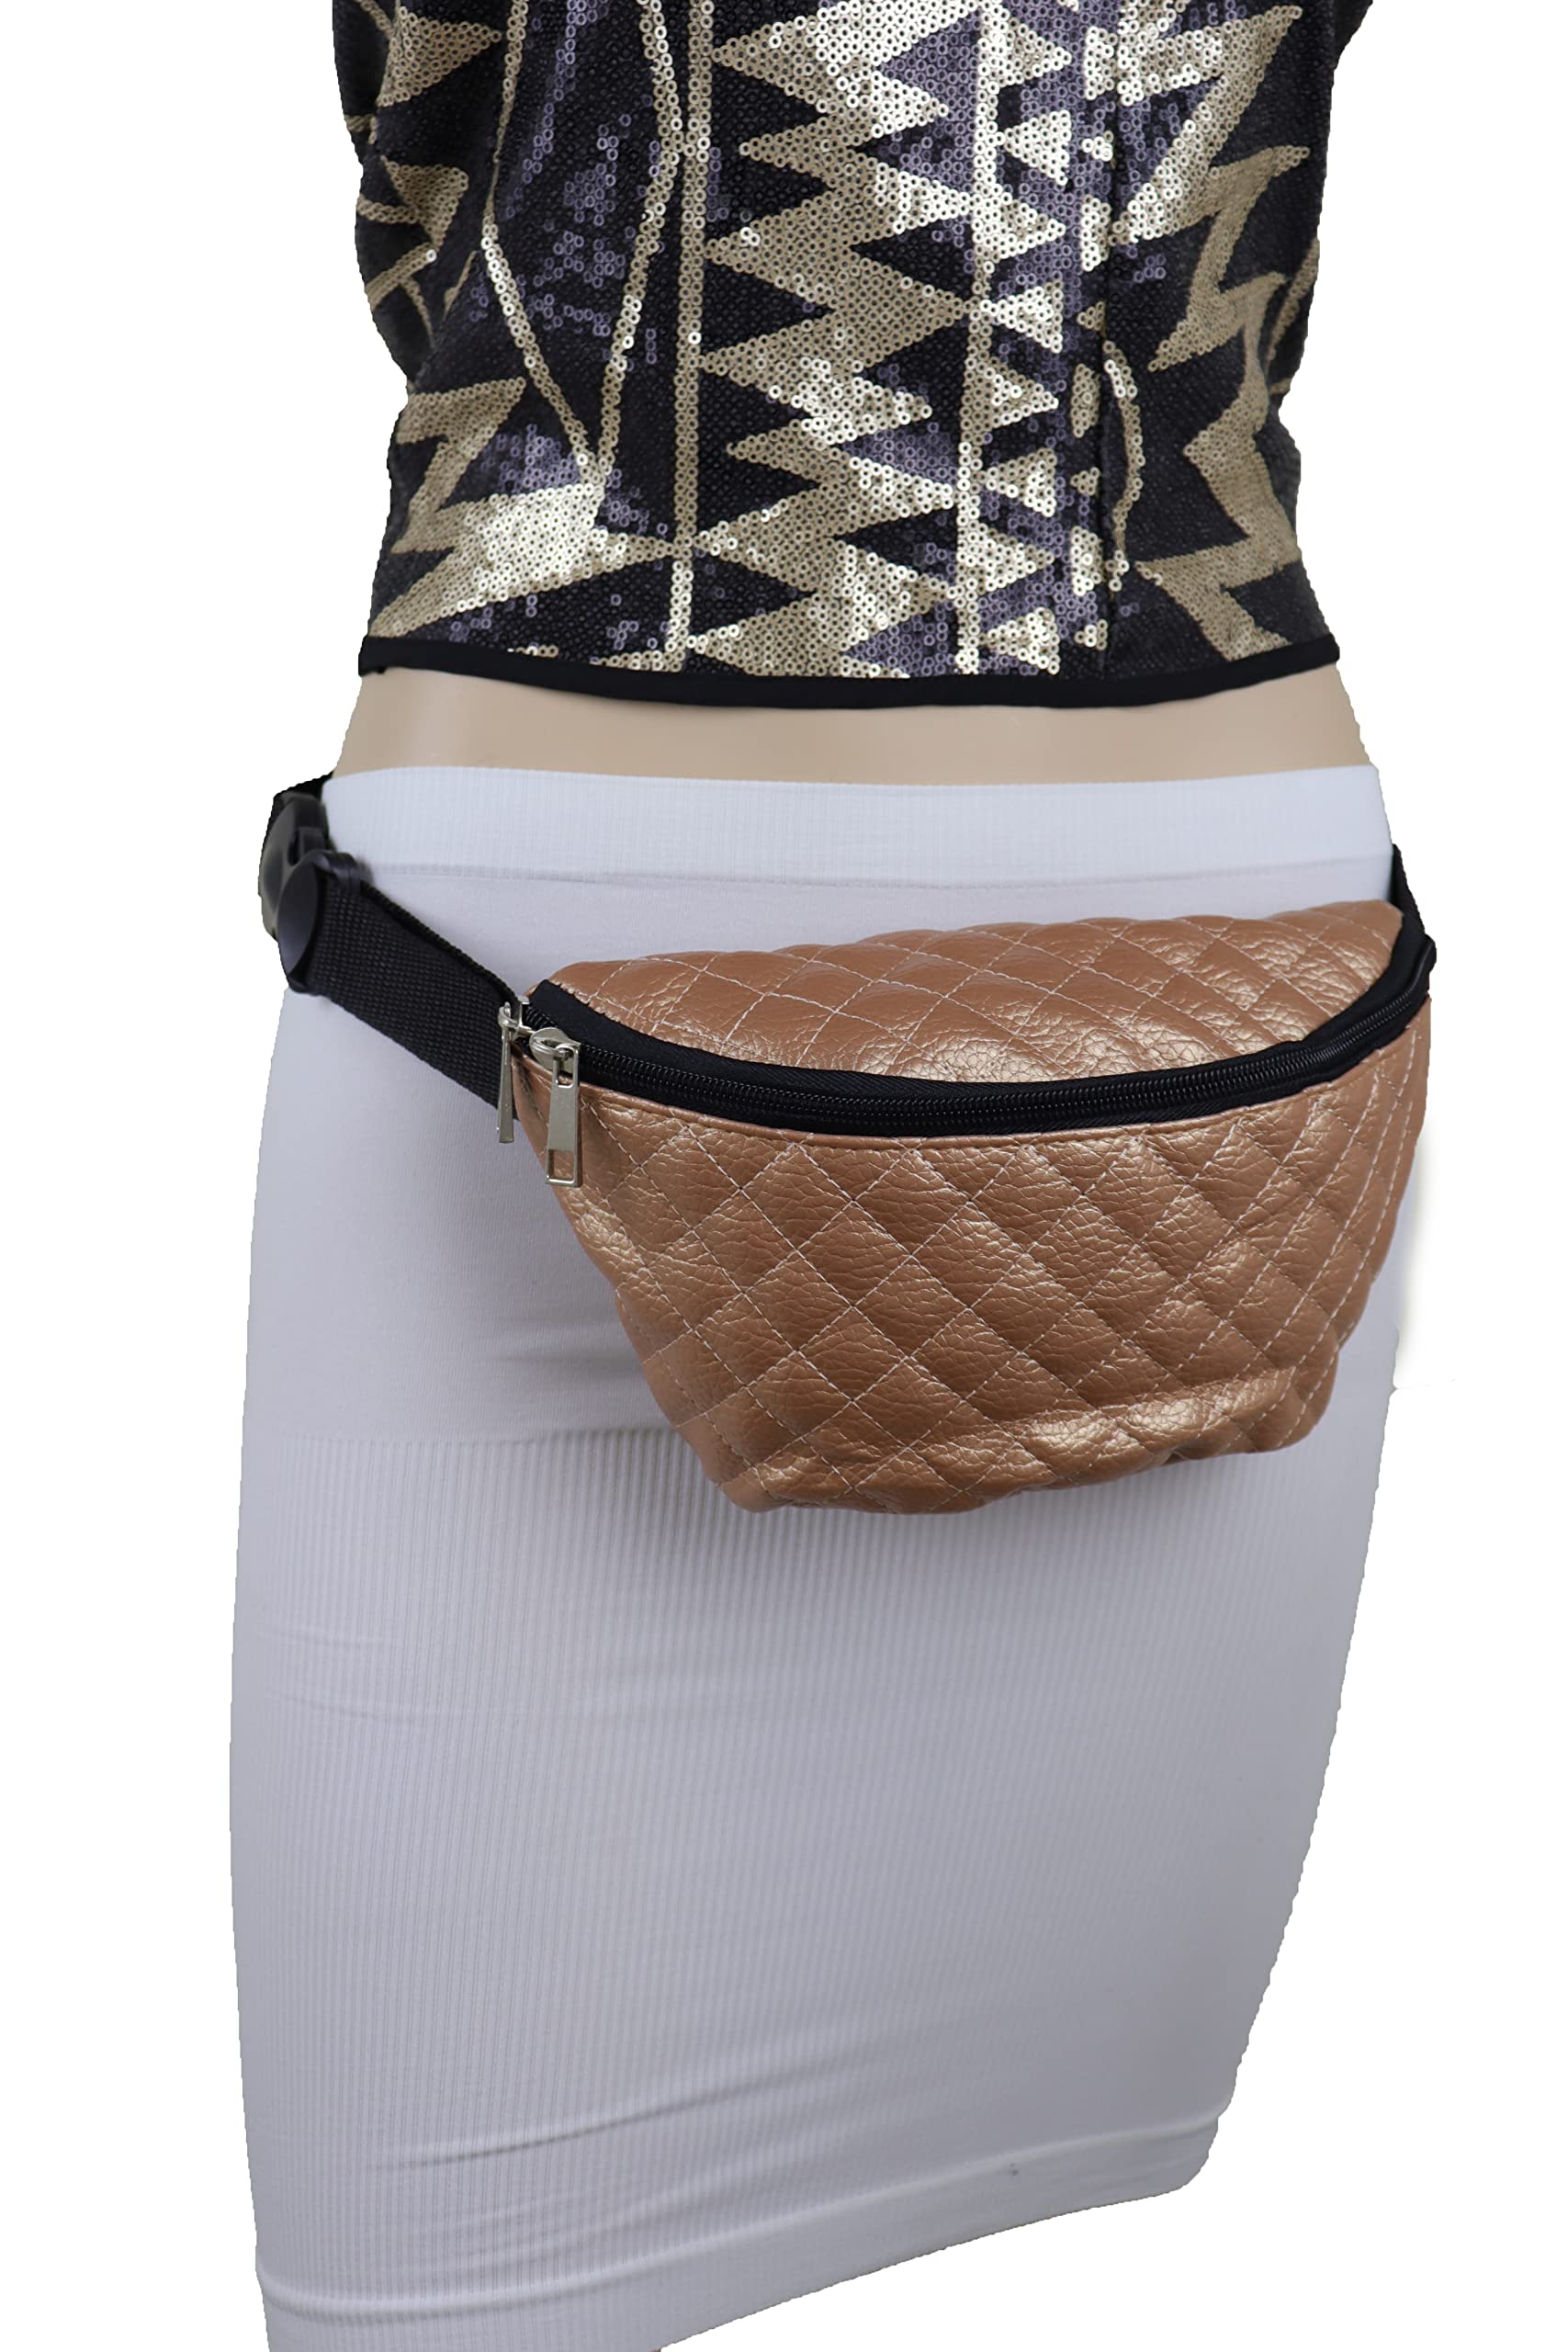 Women Rust Gold Strap Belt - Fanny Pack Fashion Belt Bum Bag Cross Body Teen Kids Young Size S M